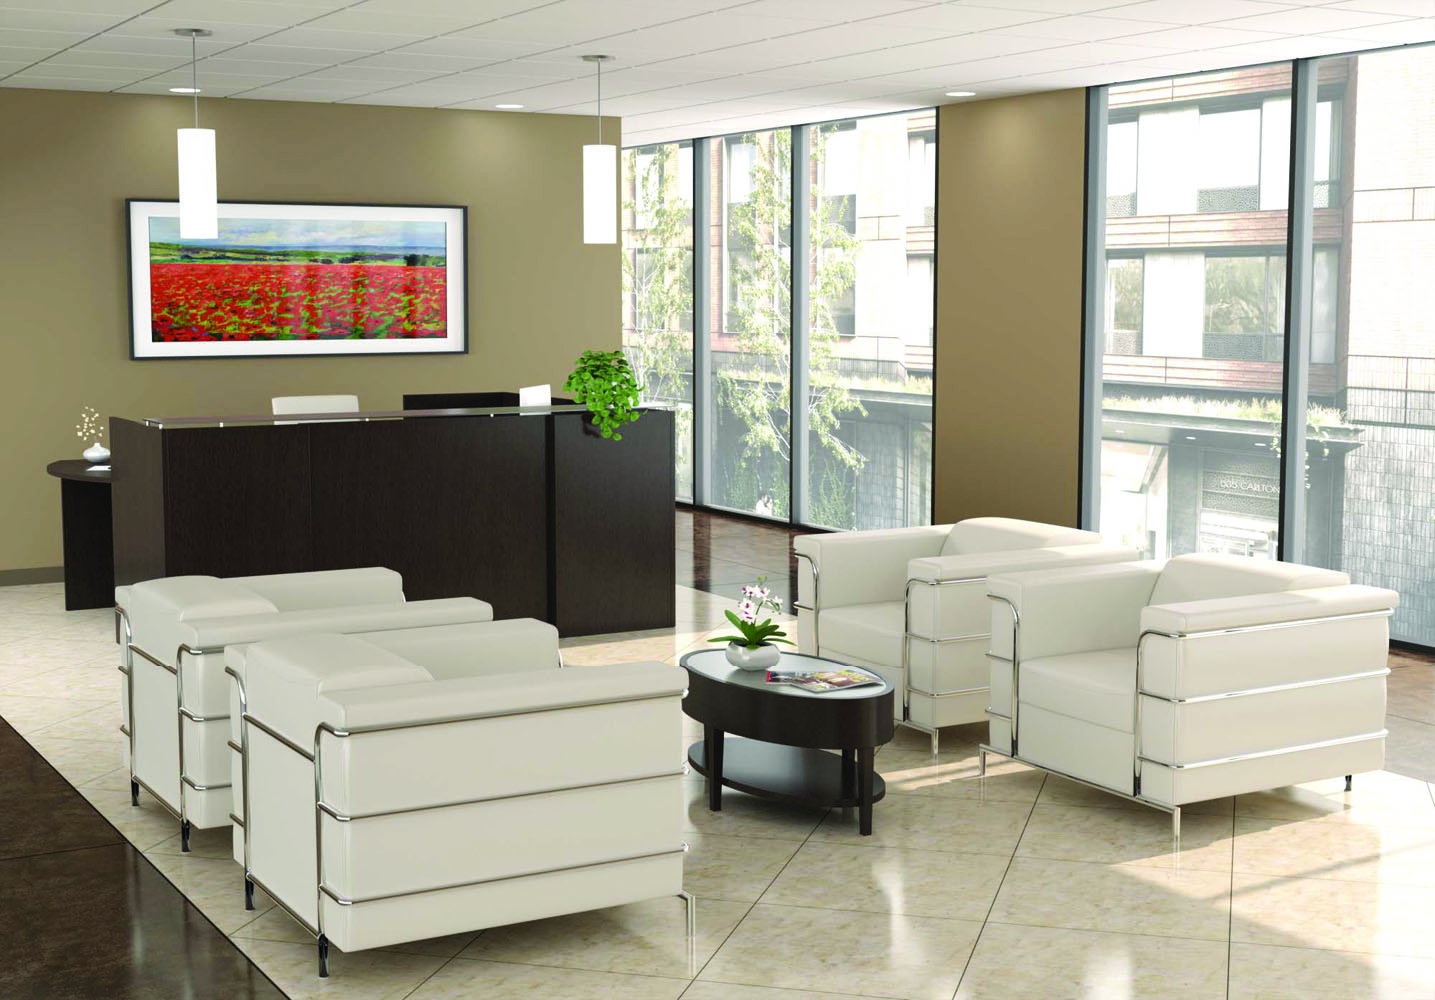 Office Lobby Design Reception Area Furniture Office Furniture Sets